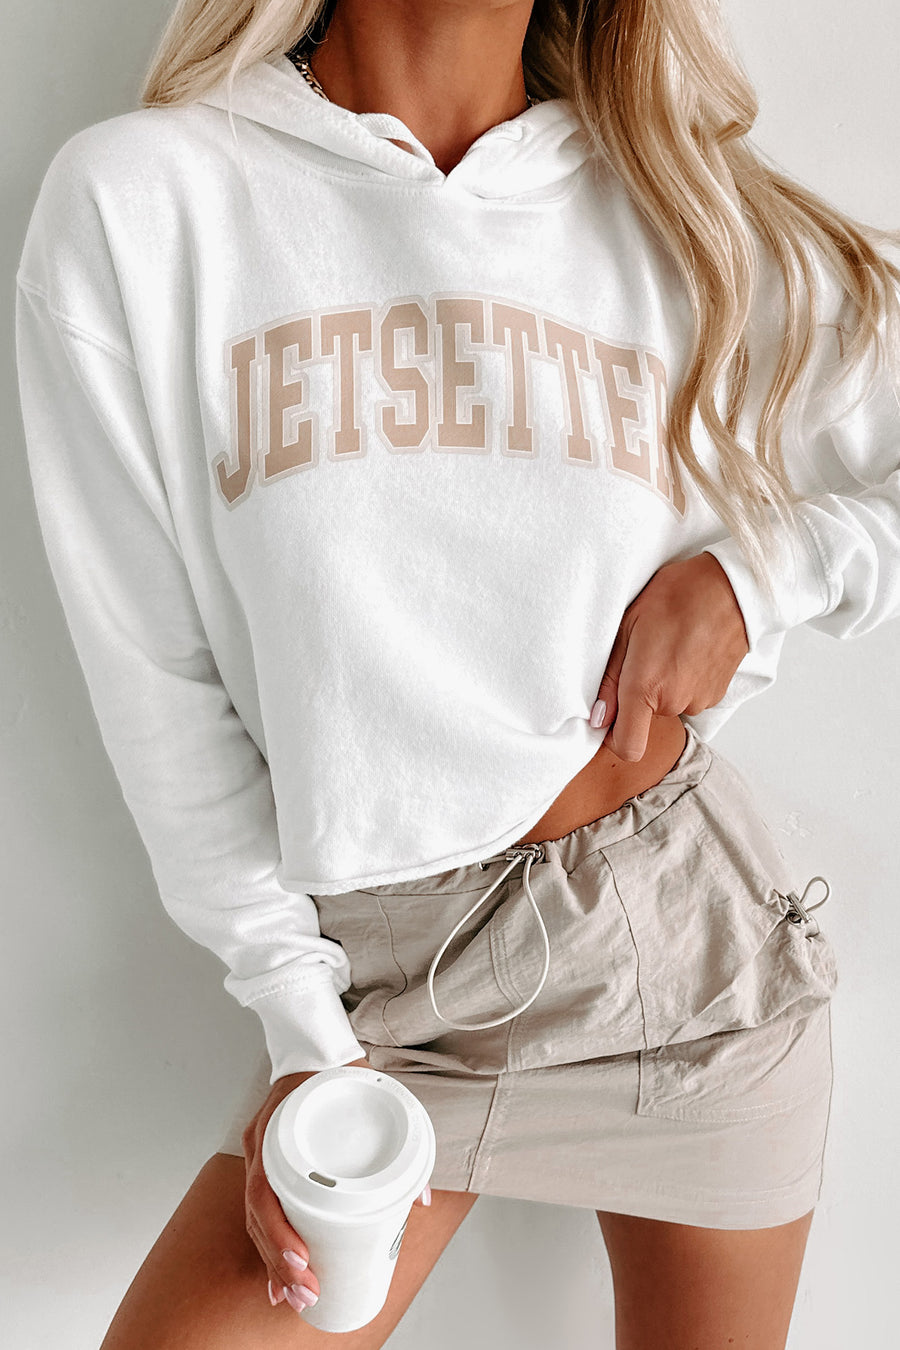 "Jetsetter" Graphic - Multiple Shirt Options (White) - Print On Demand - NanaMacs